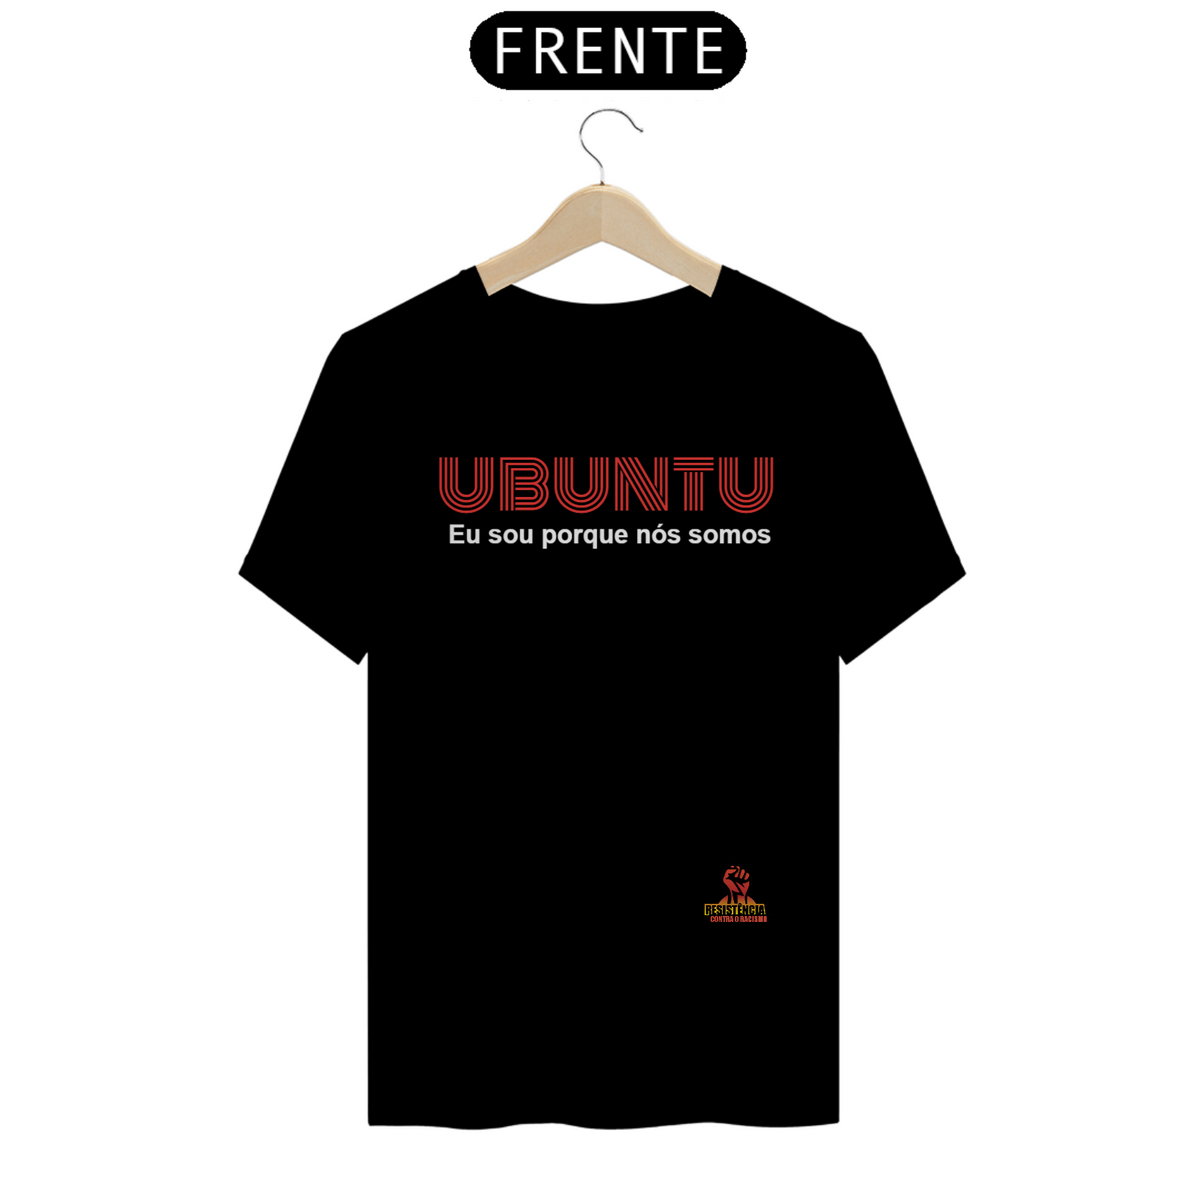 Nome do produto: Camisa Ubuntu